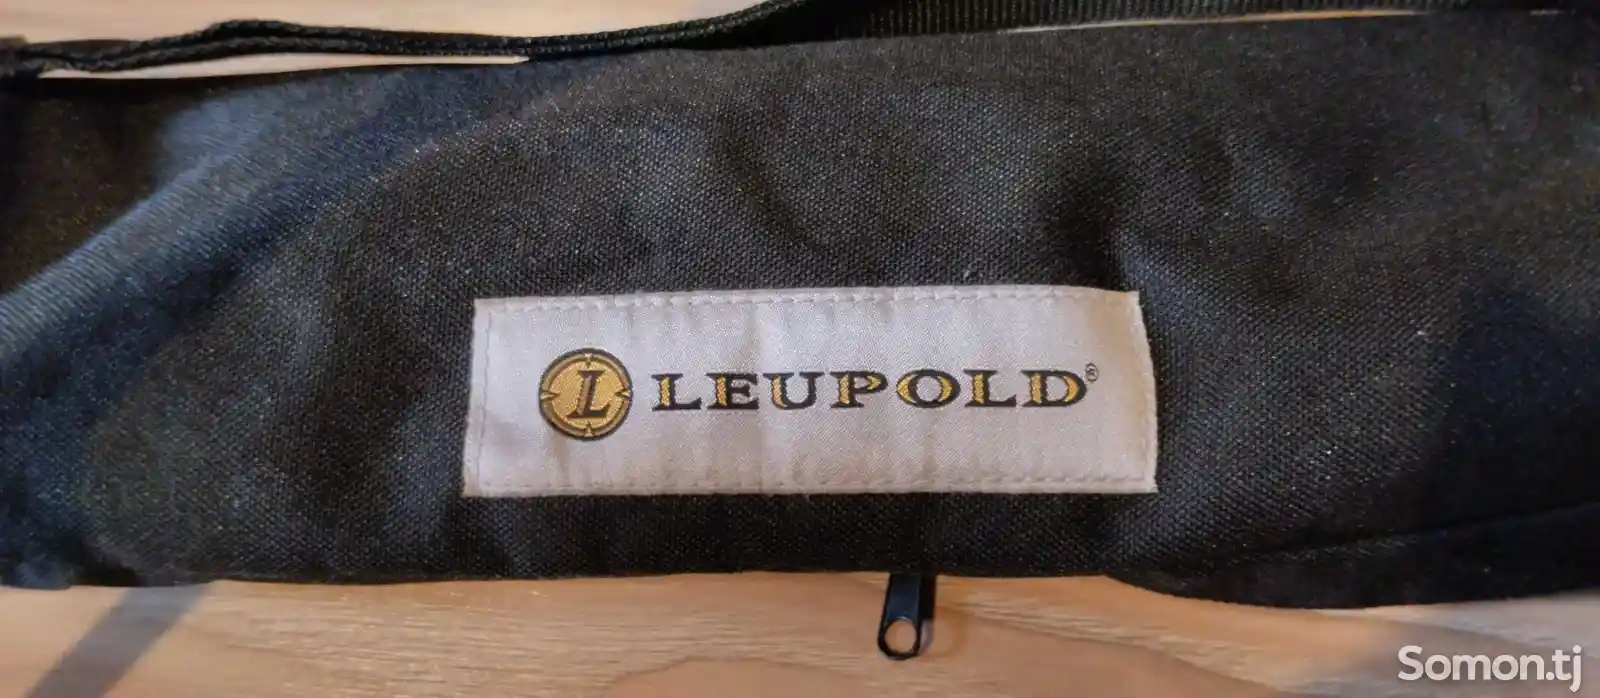 Штатив Leupold-5